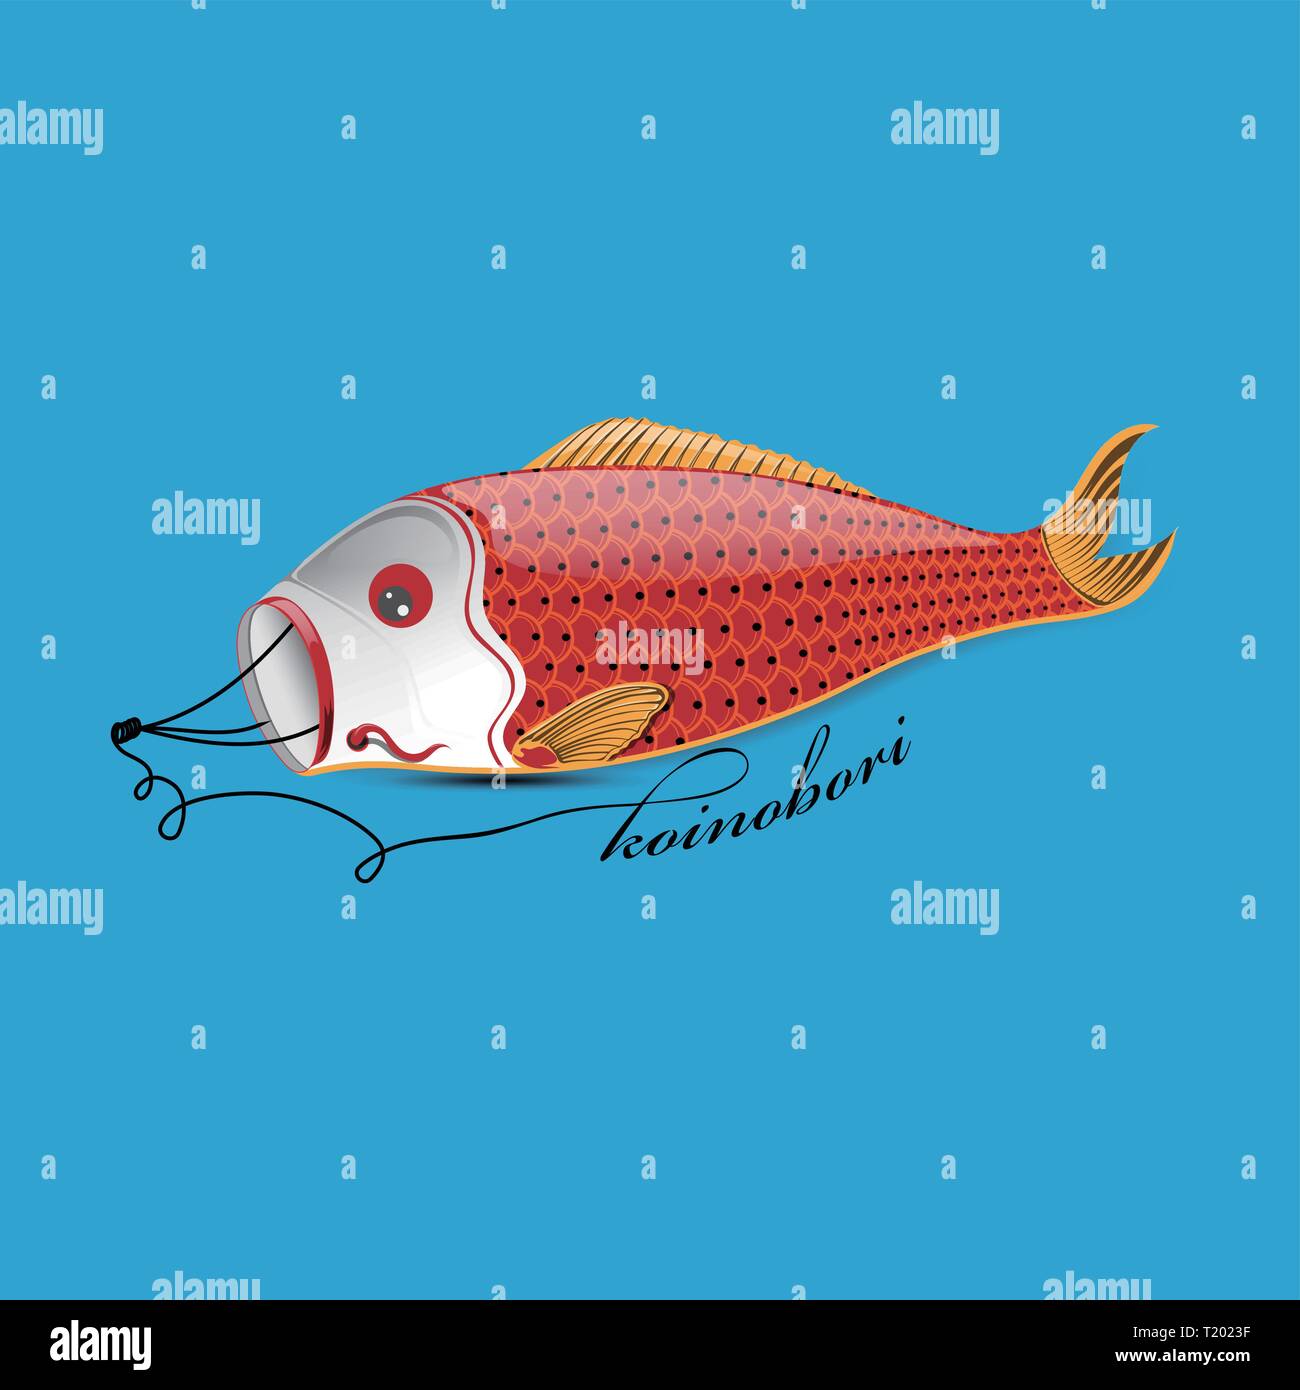 Illustration of carp streamer,Koinobori Stock Vector